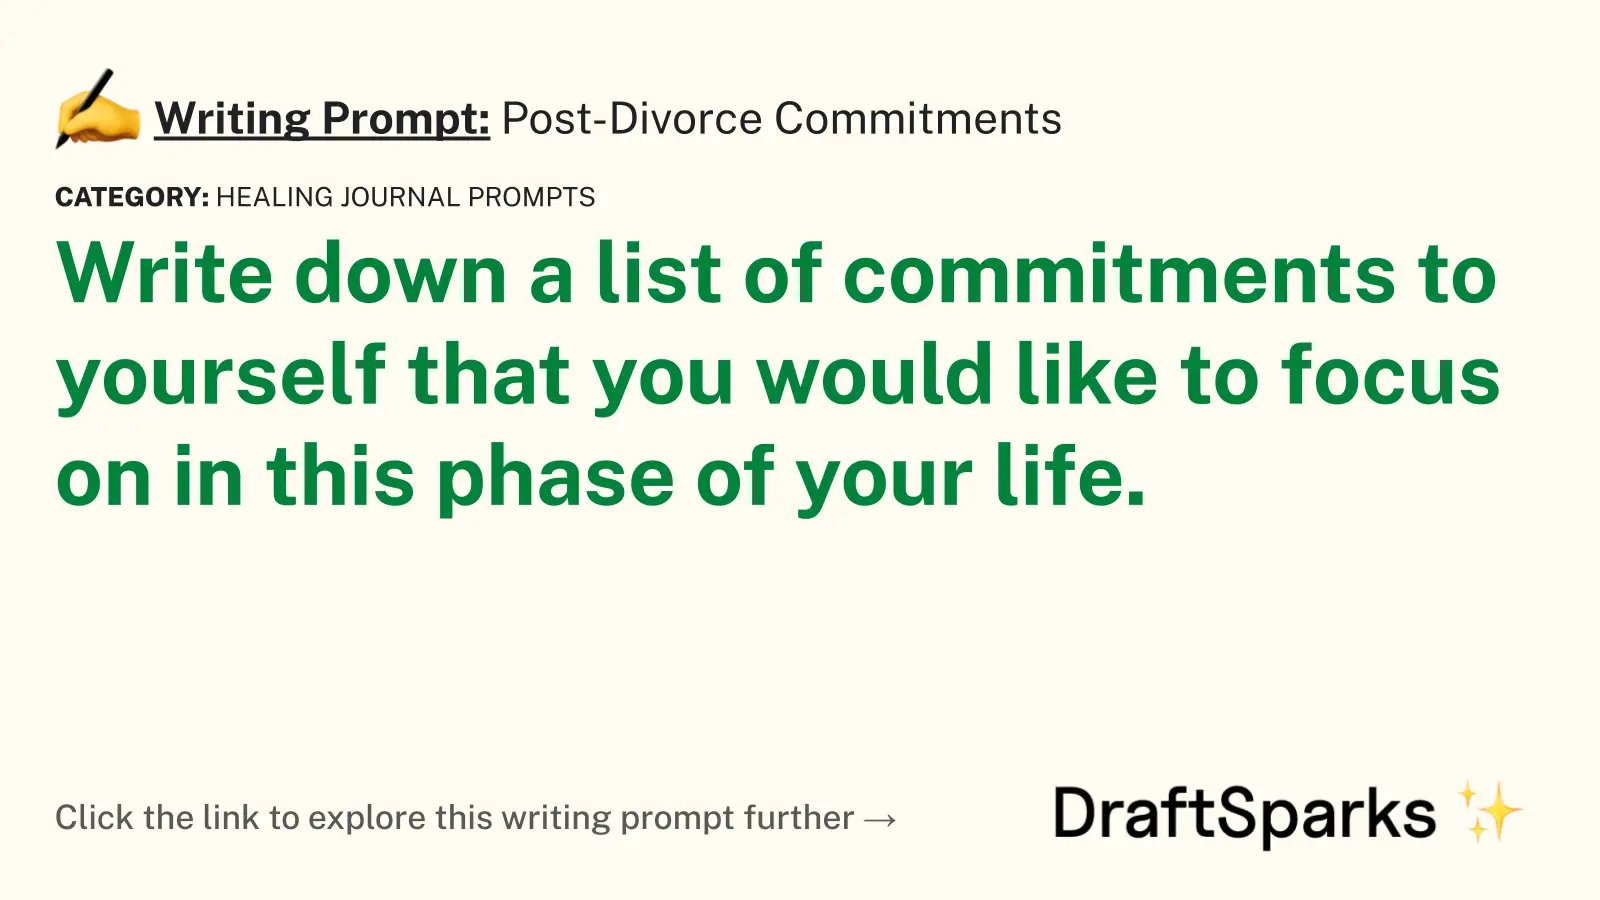 Post-Divorce Commitments